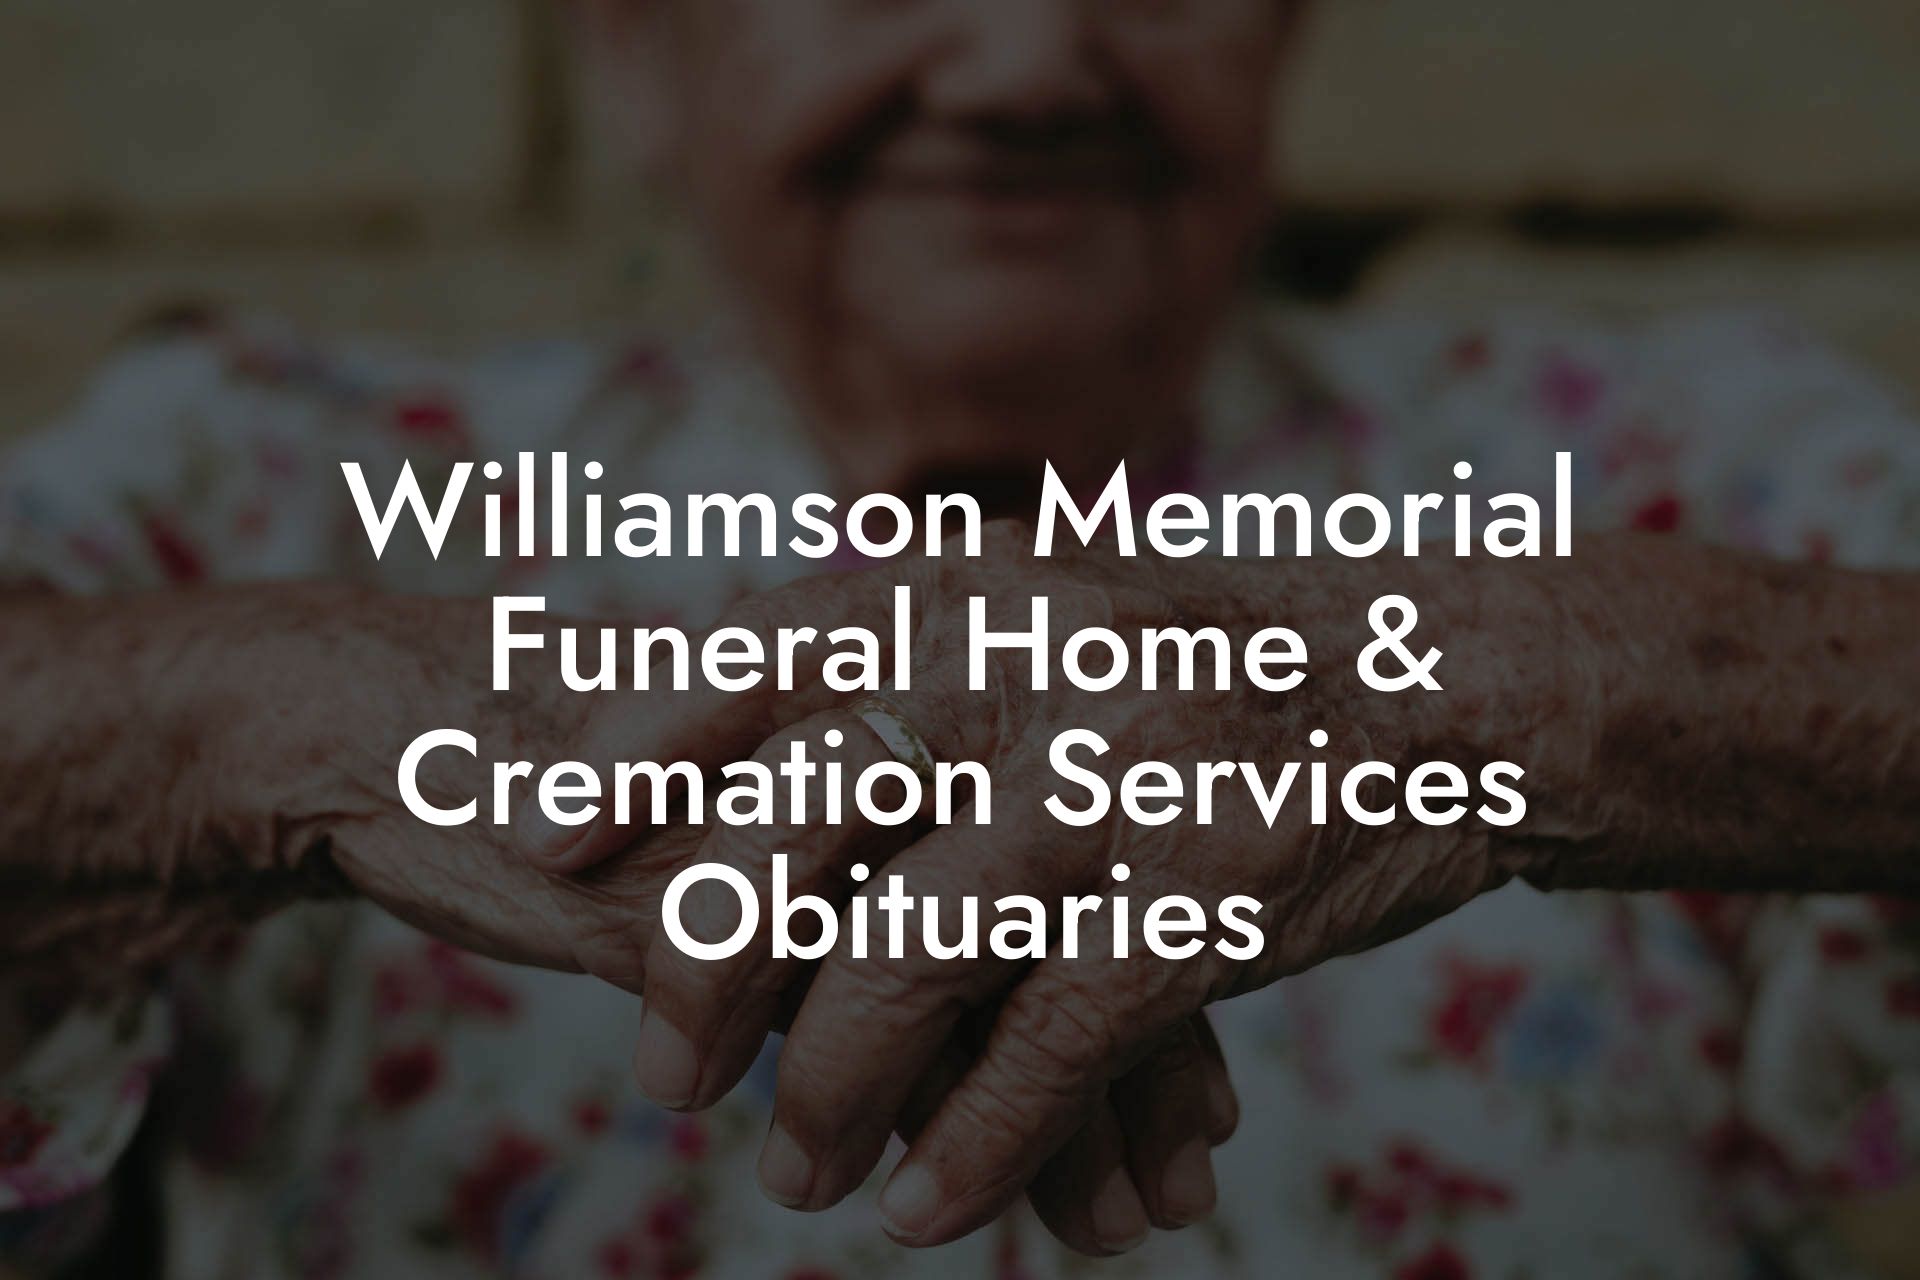 Williamson Memorial Funeral Home & Cremation Services Obituaries